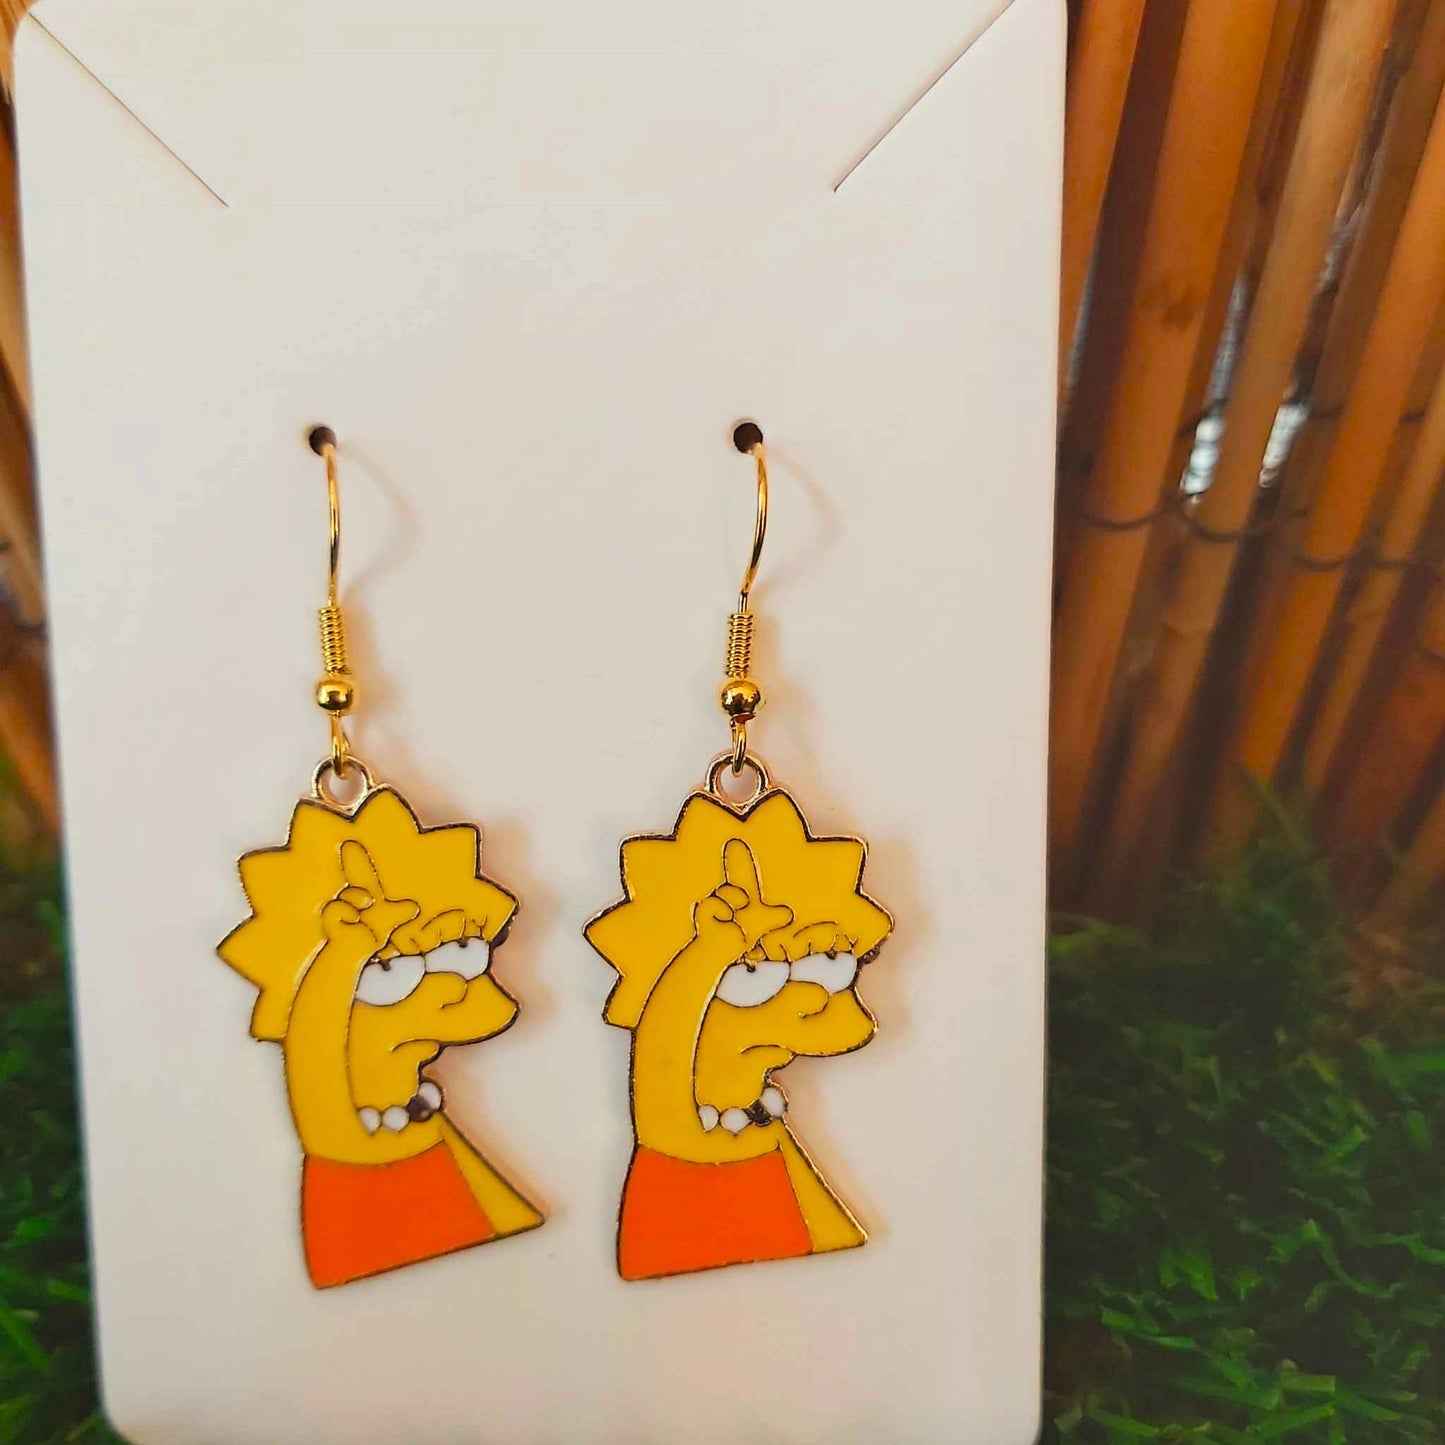 Handmade The Simpsons Lisa Earrings